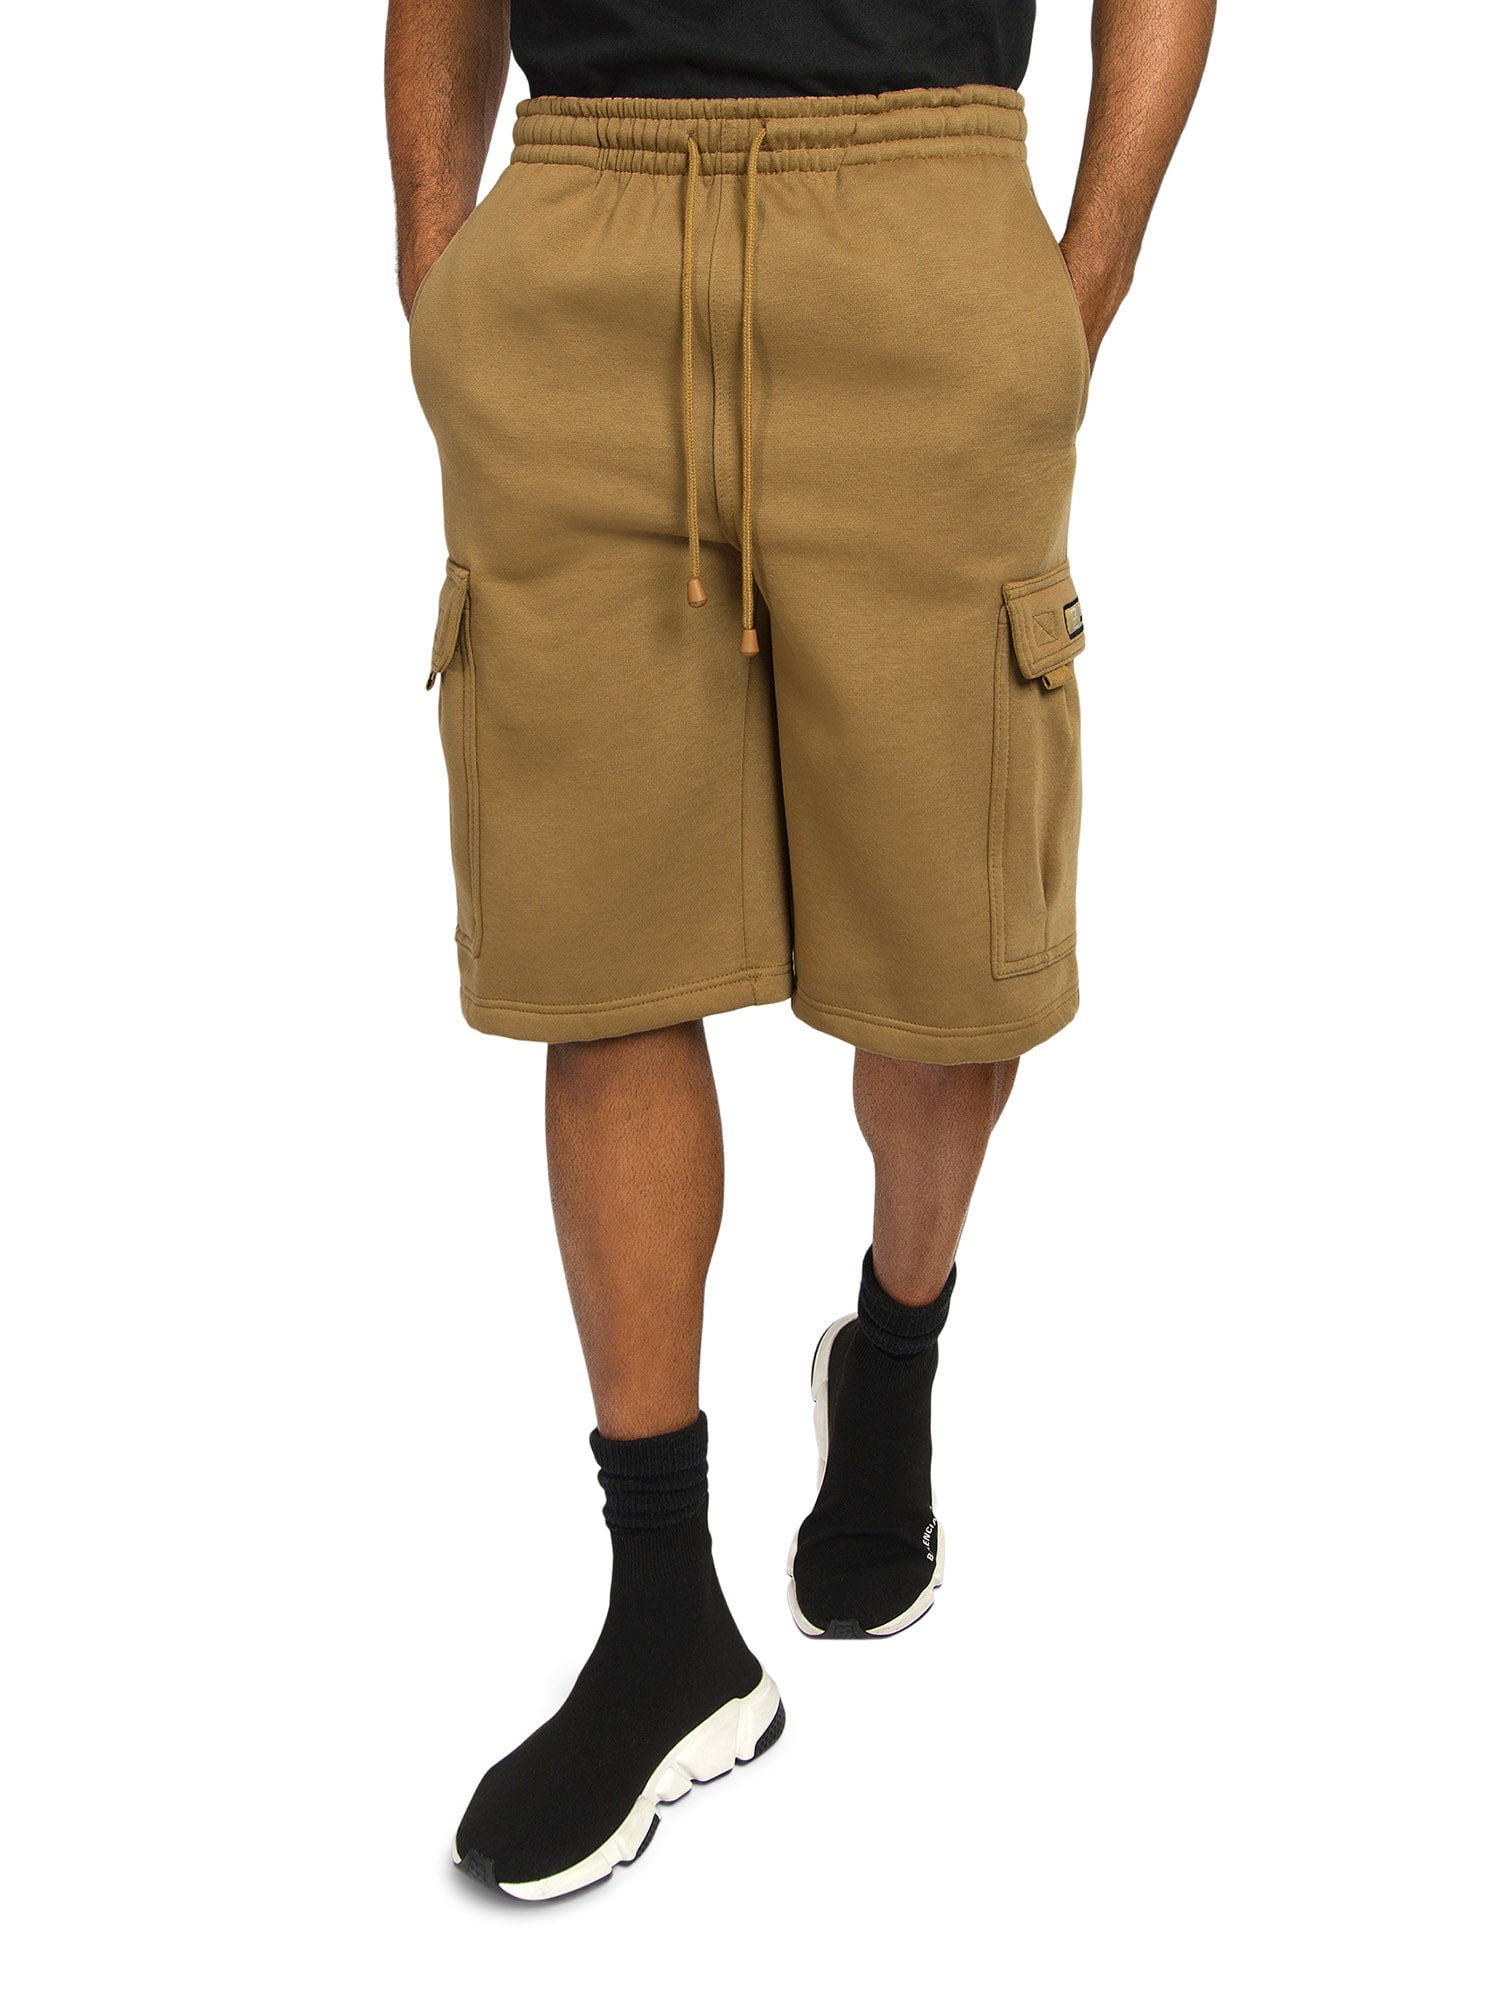 G-Style USA Men's Solid Fleece Heavyweight Cargo Shorts FS76 - Wheat -  4X-Large